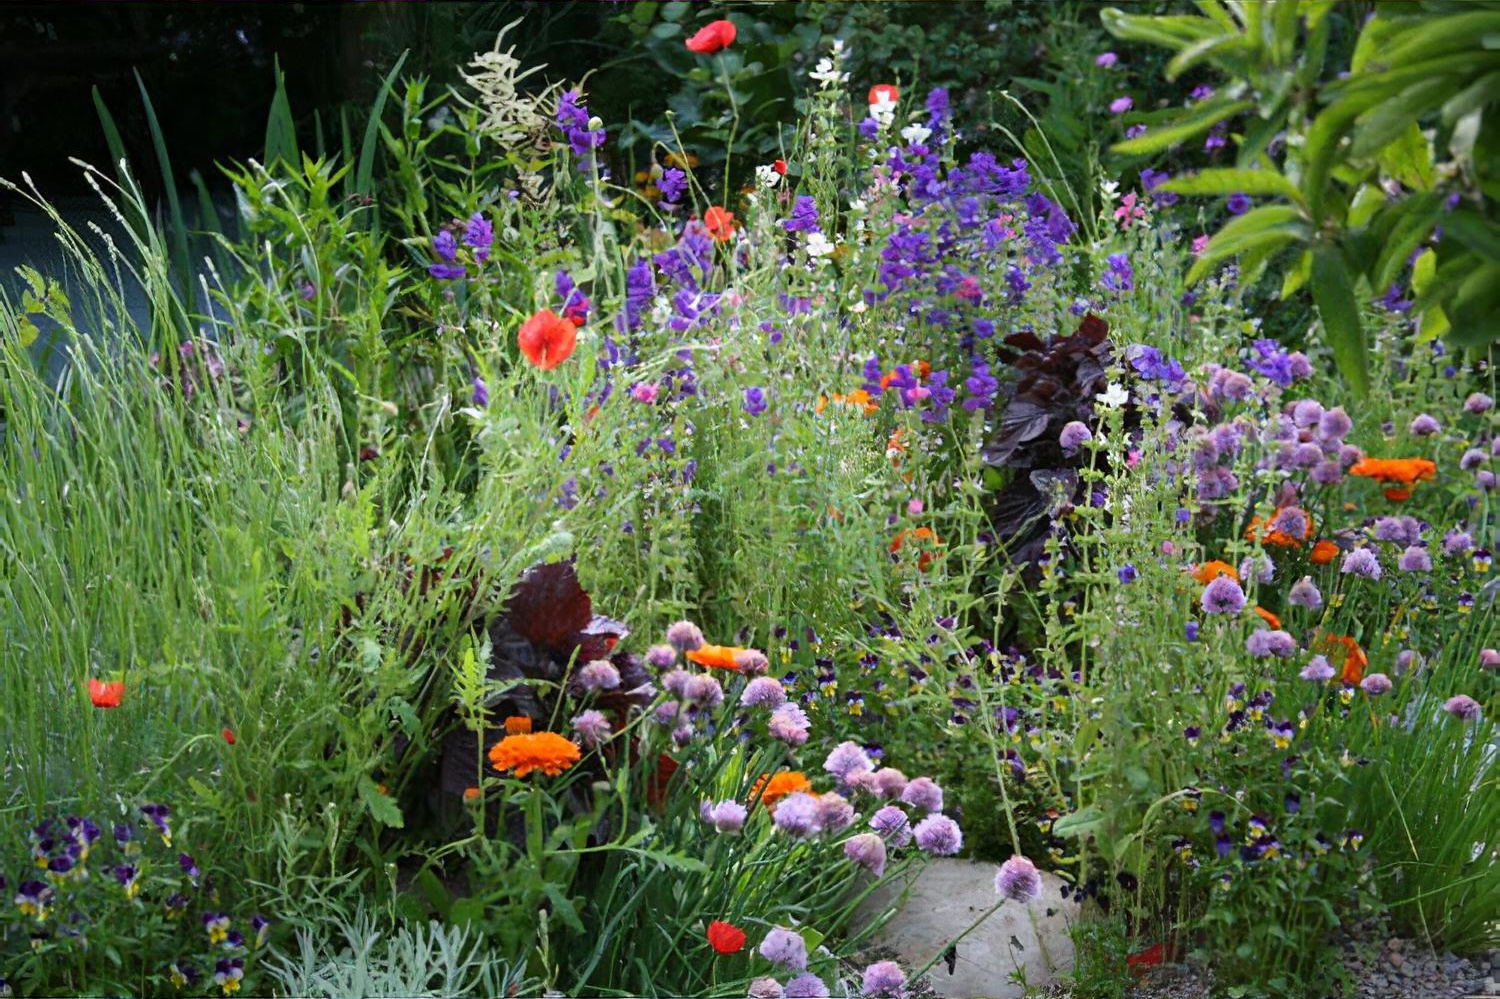 The SKYshades Wild Office by garden designer Marney Hall Chelsea Flower Show 2011